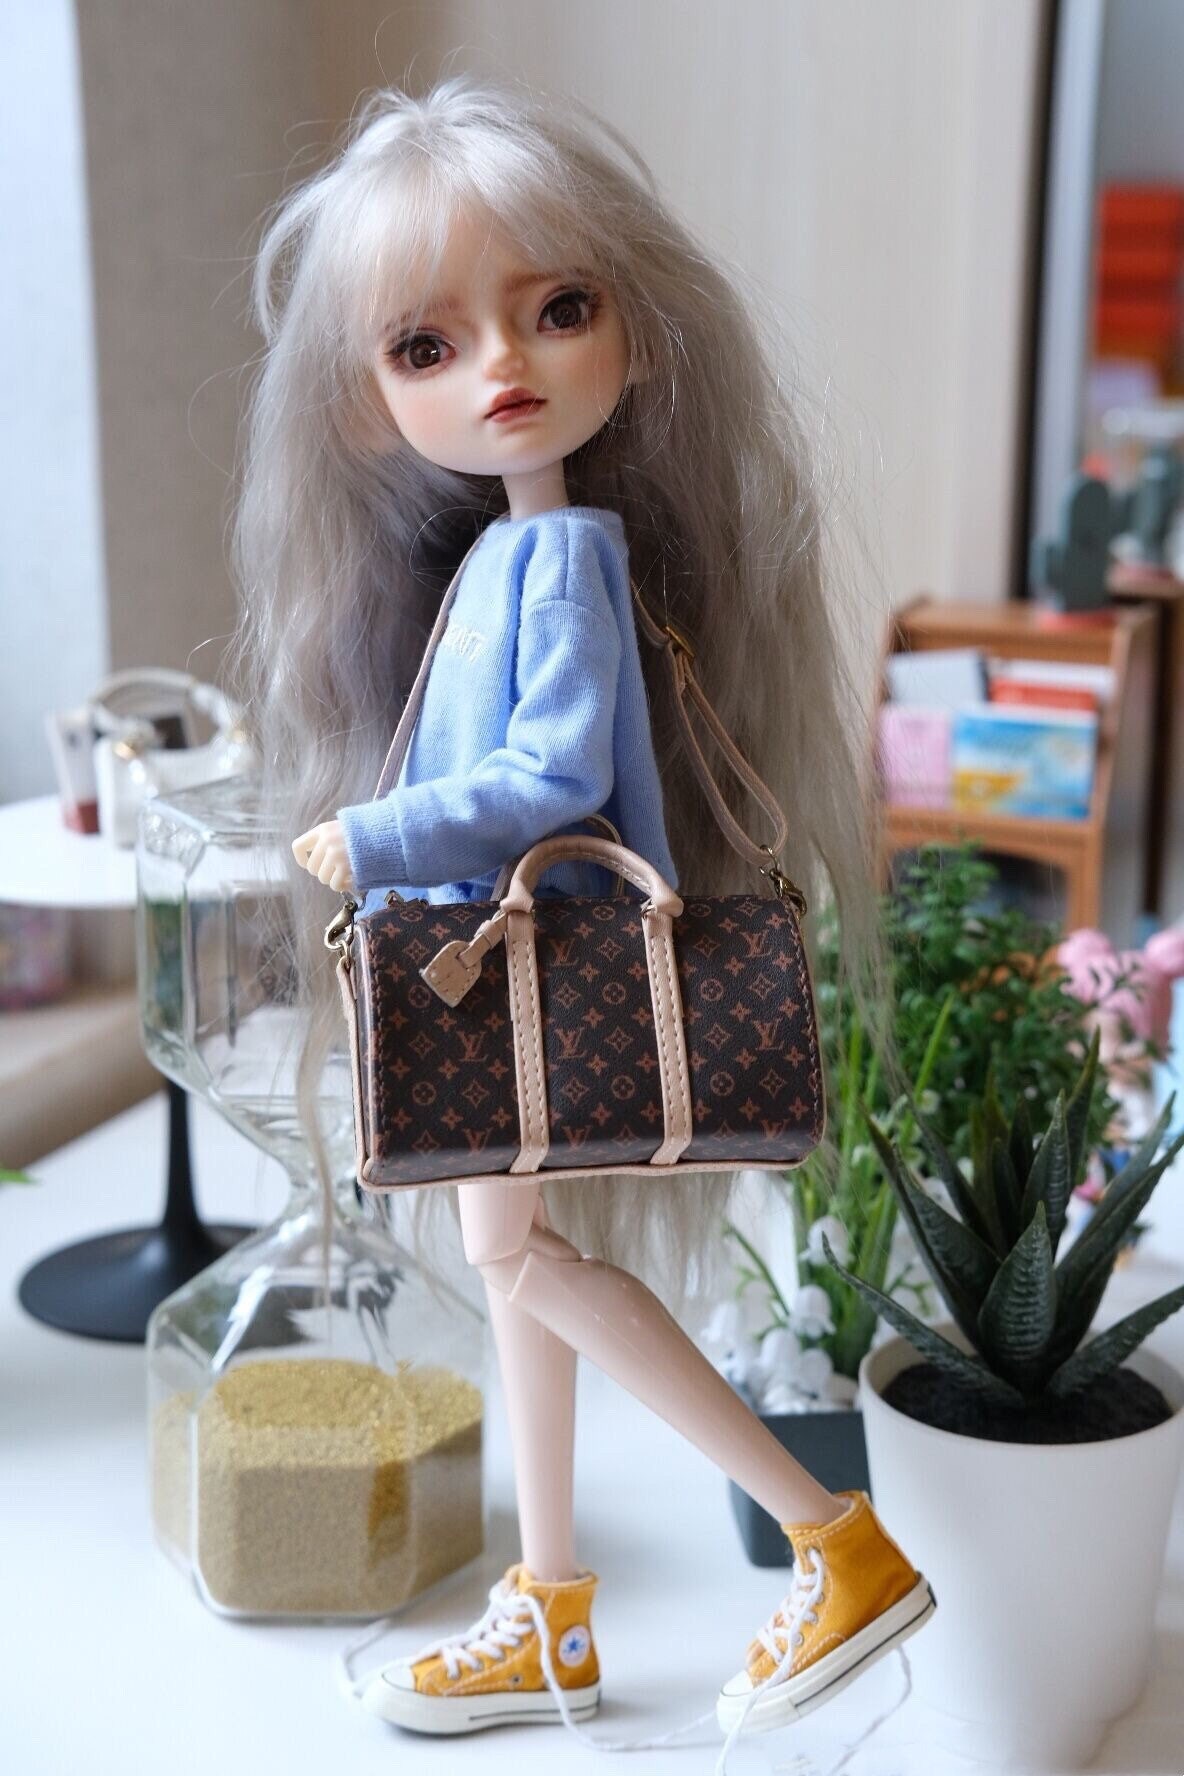 Dollhouse doll fashion accessory handbag designer purse Gucci Dior Hermes  Chanel Louis Vuitton —